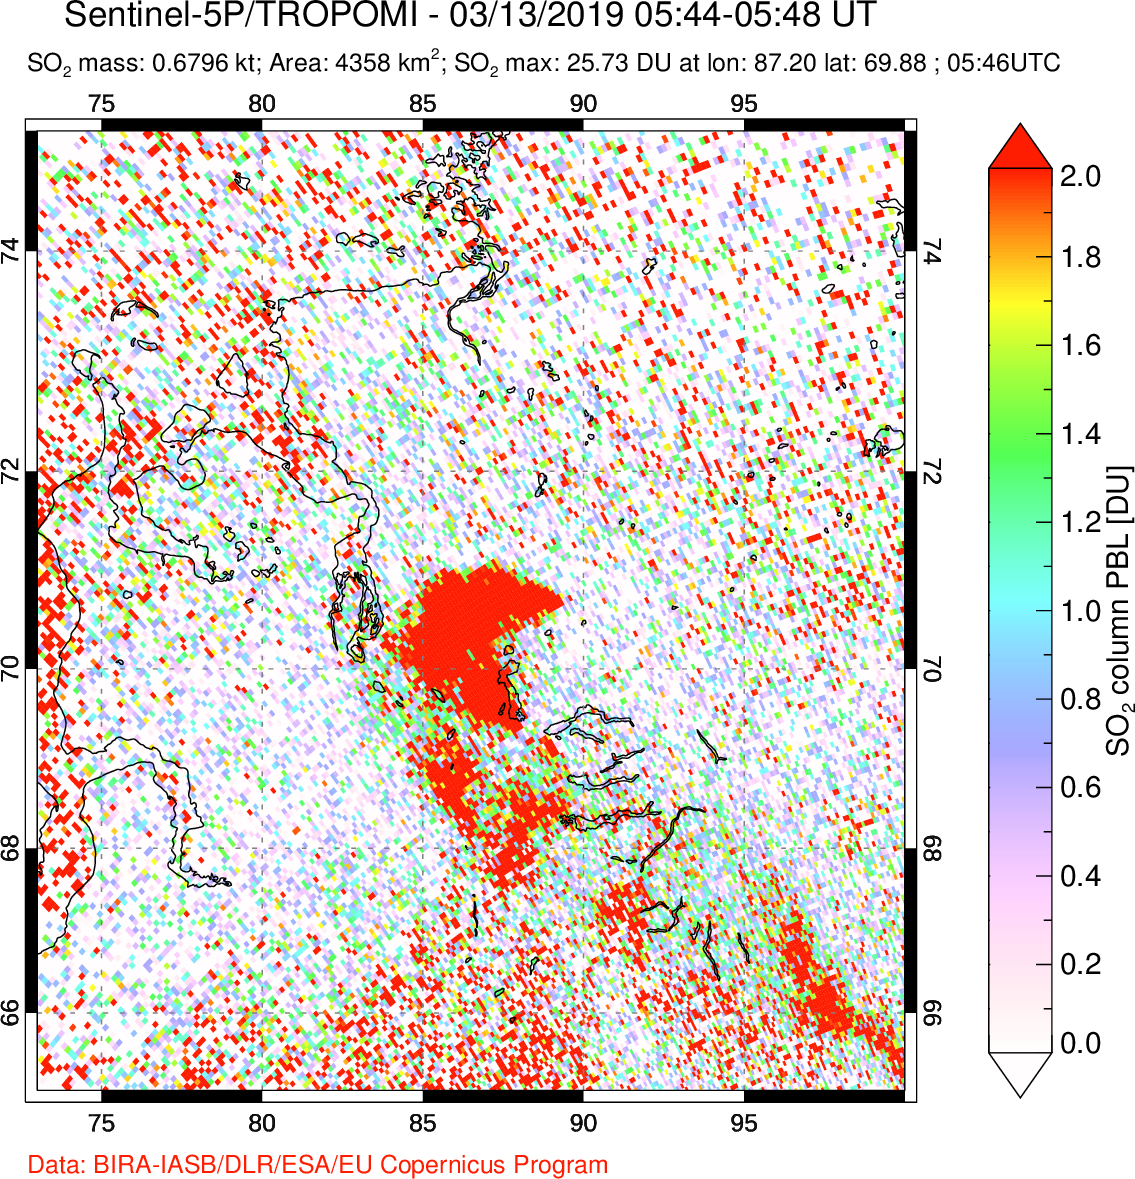 A sulfur dioxide image over Norilsk, Russian Federation on Mar 13, 2019.